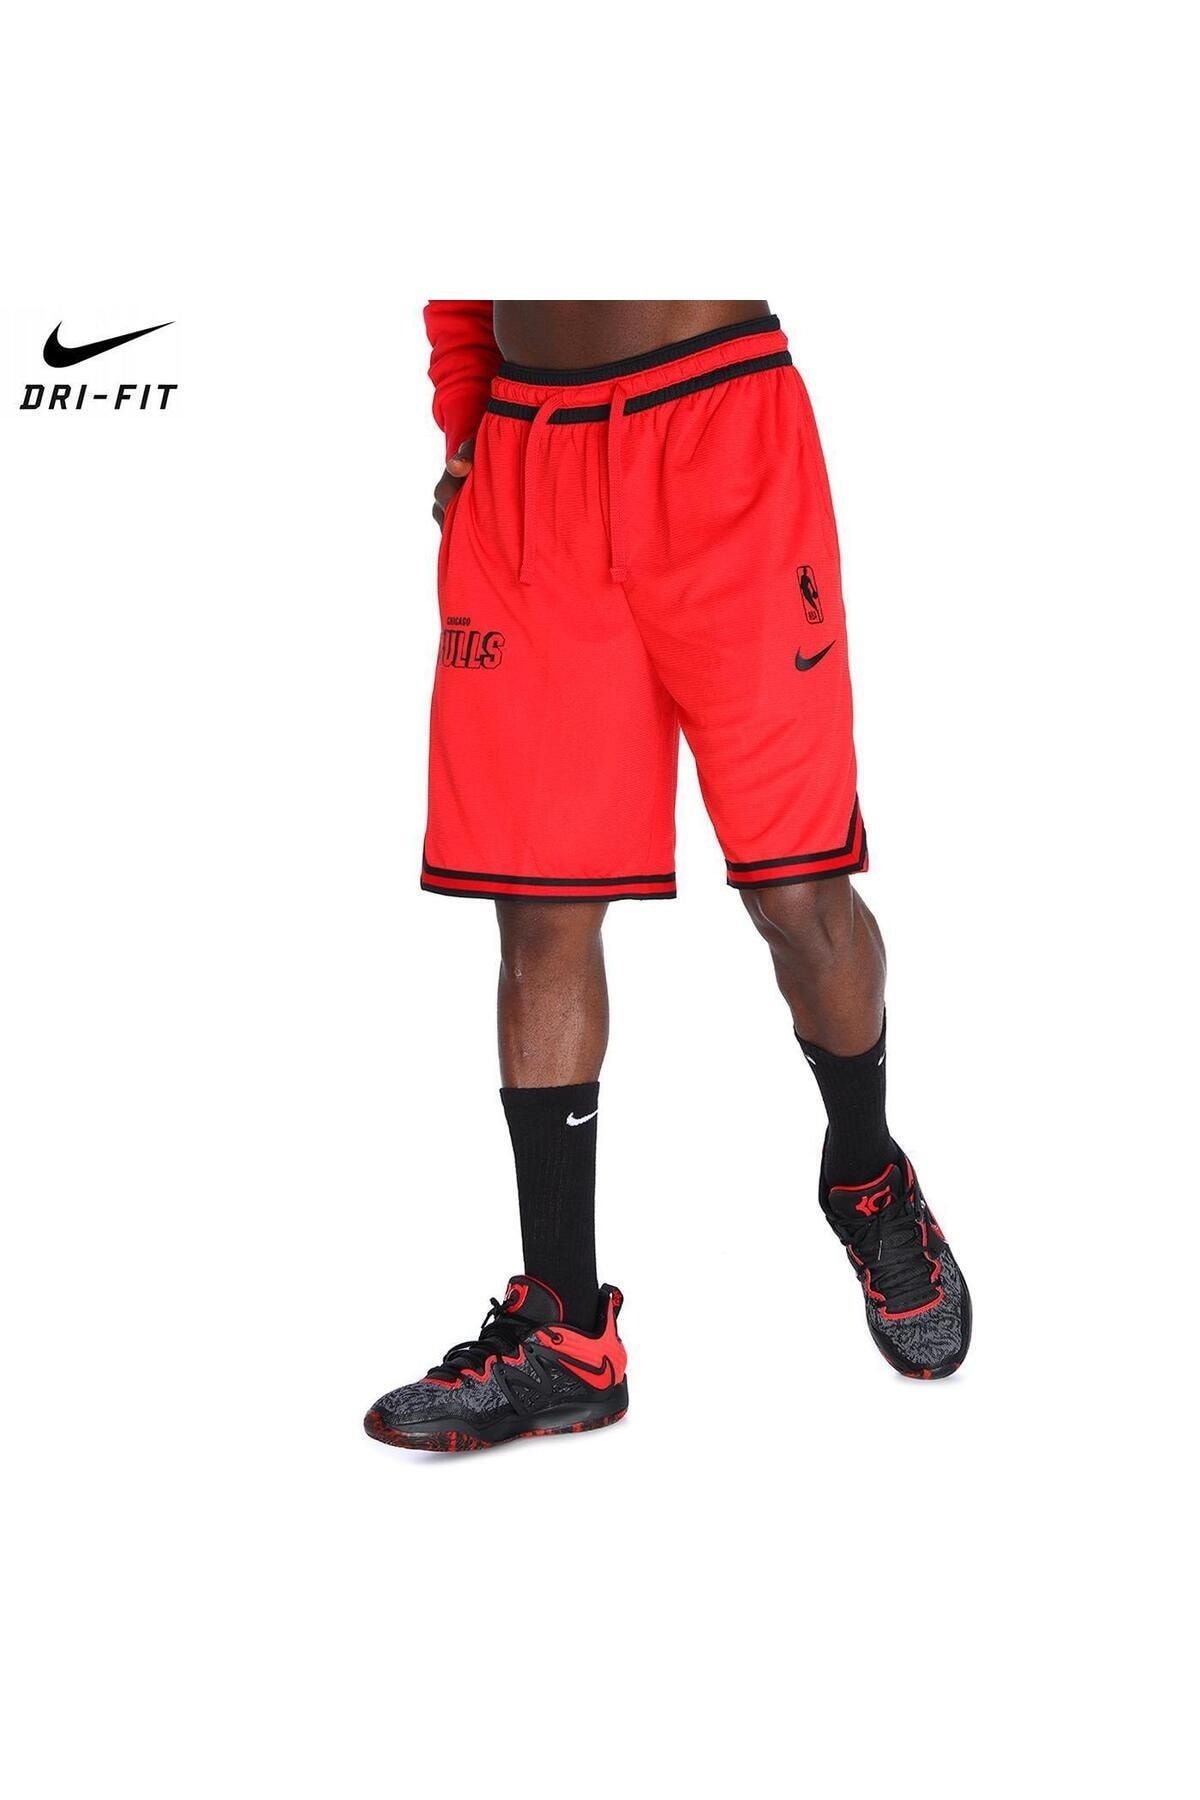 Men's Nike Dri-Fit Chicago Bulls Training Sports Quick Dry Sleeveless Red T-Shirt DM3224-657